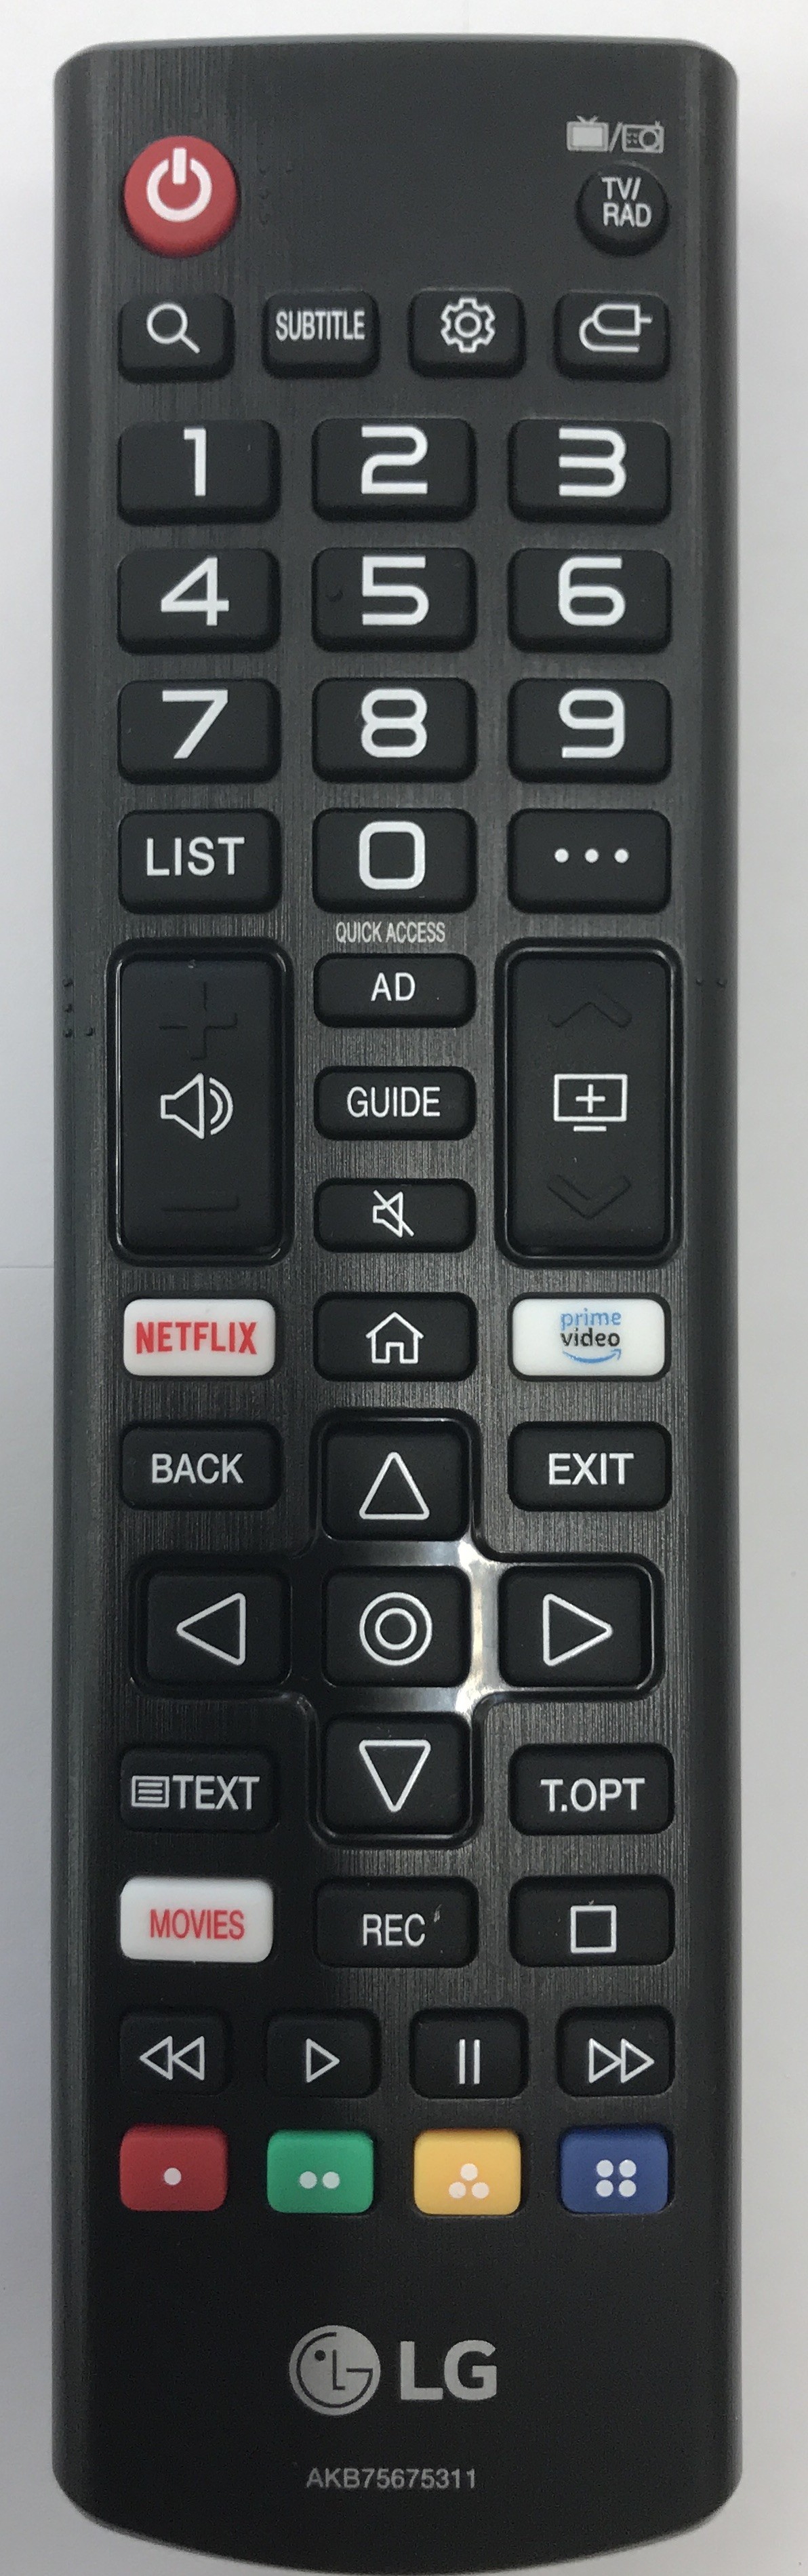 LG AKB75095308 Remote Control Original